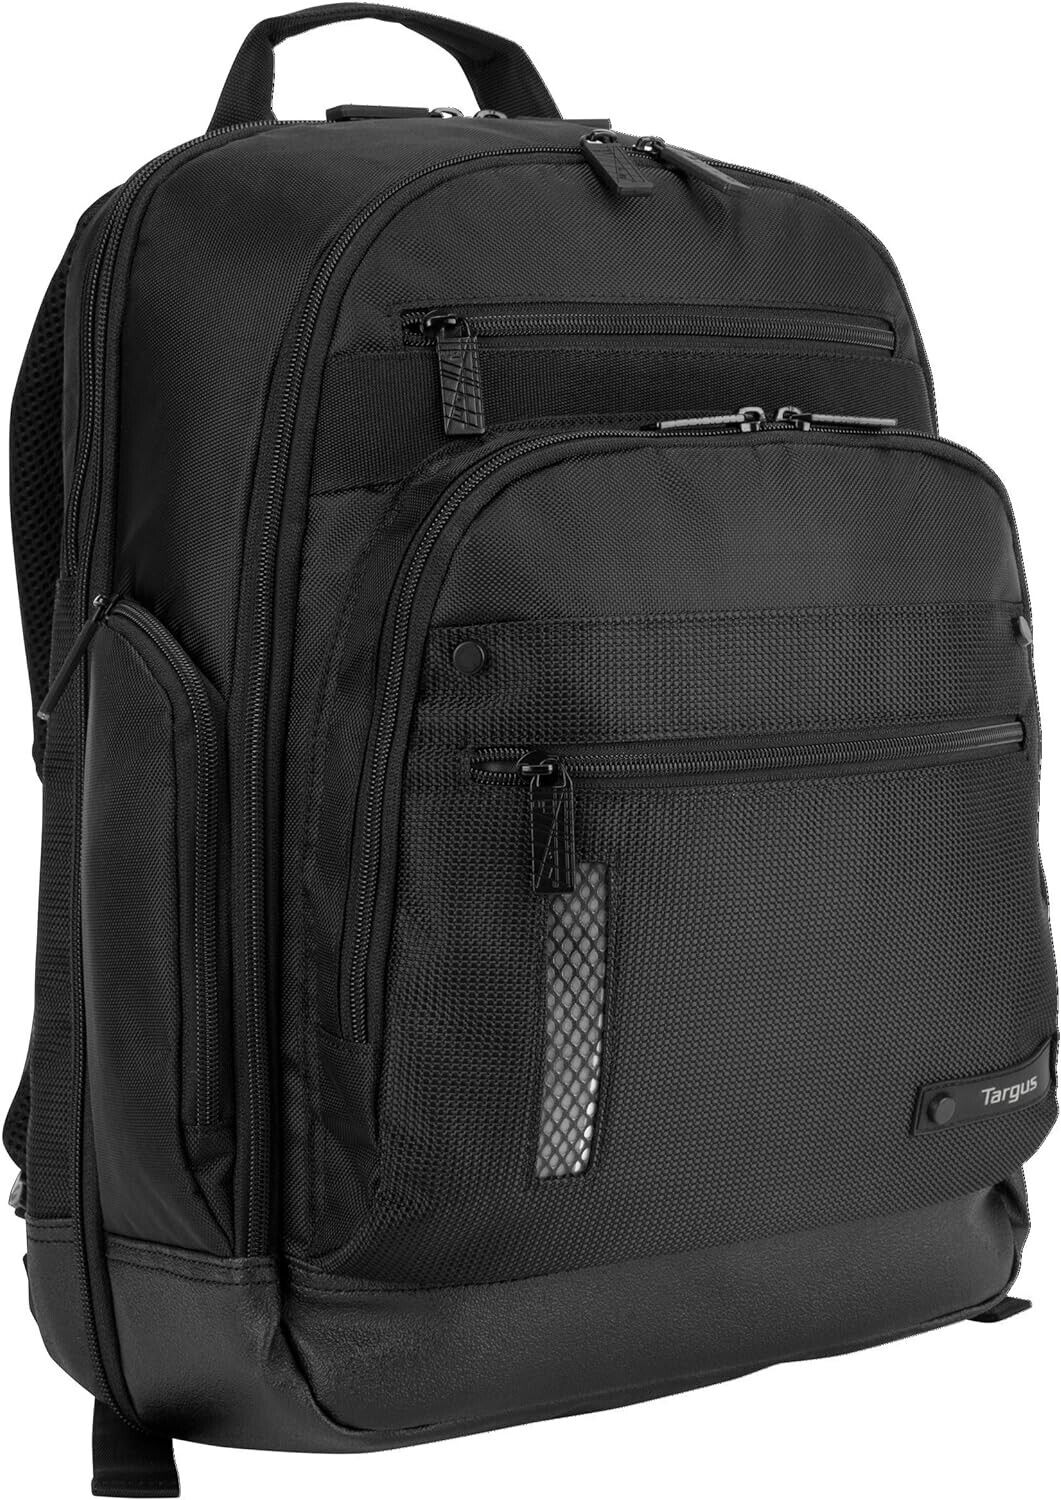 Targus Travel & TSA-Friendly Backpack w 14in Laptop Sleeve, Black, New Sealed